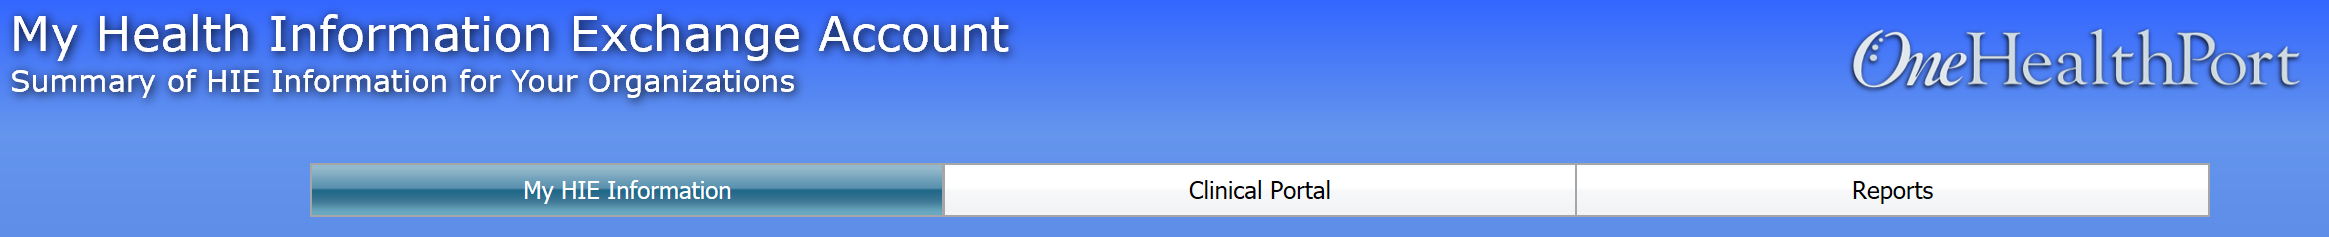 Clinical_Portal_2e.png